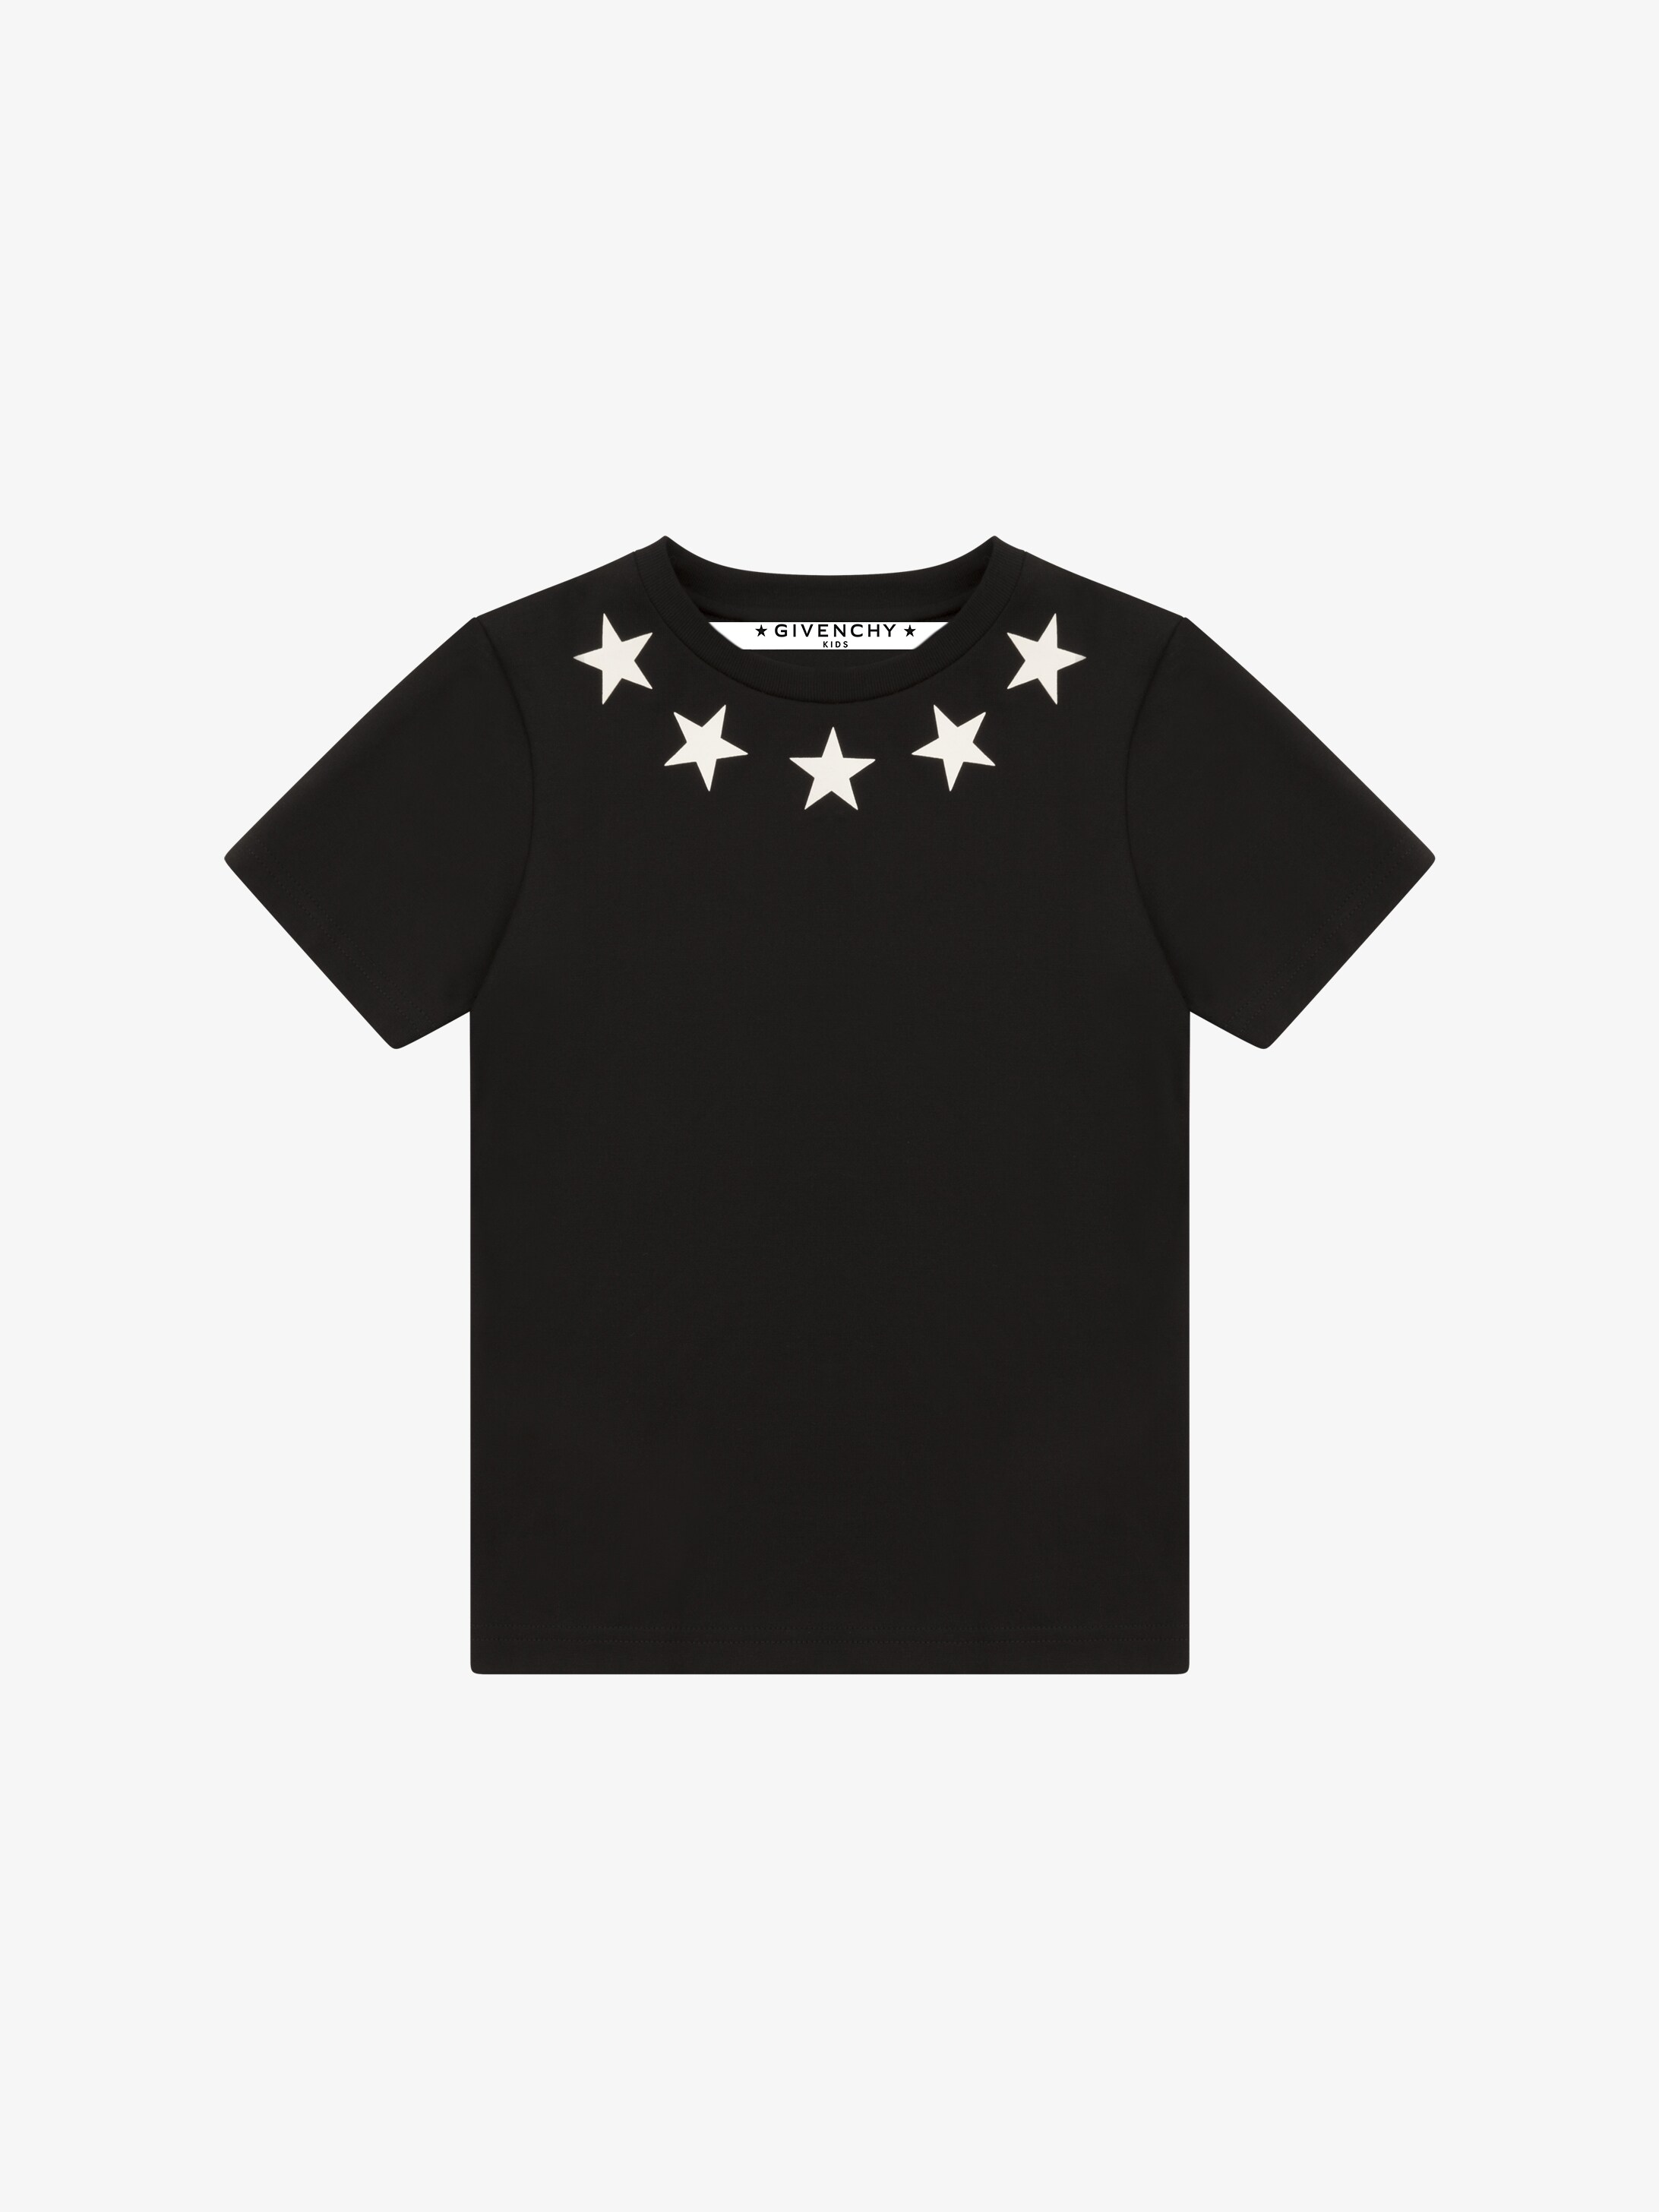 givenchy t shirt black stars